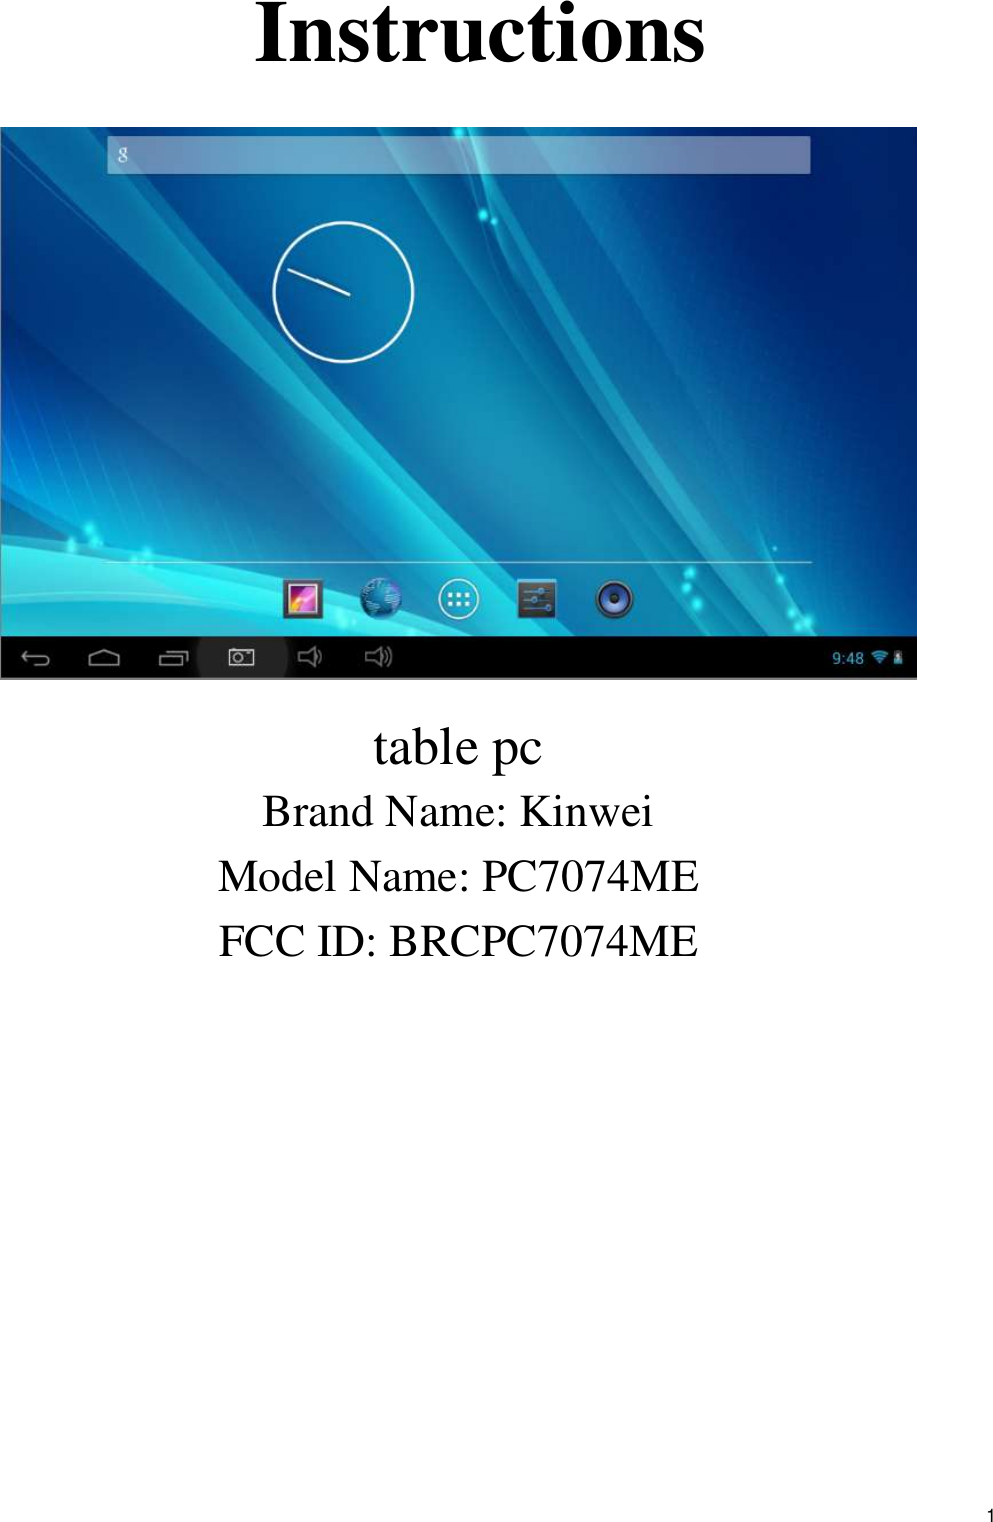    1   Instructions                      table pc   Brand Name: Kinwei Model Name: PC7074ME FCC ID: BRCPC7074ME 